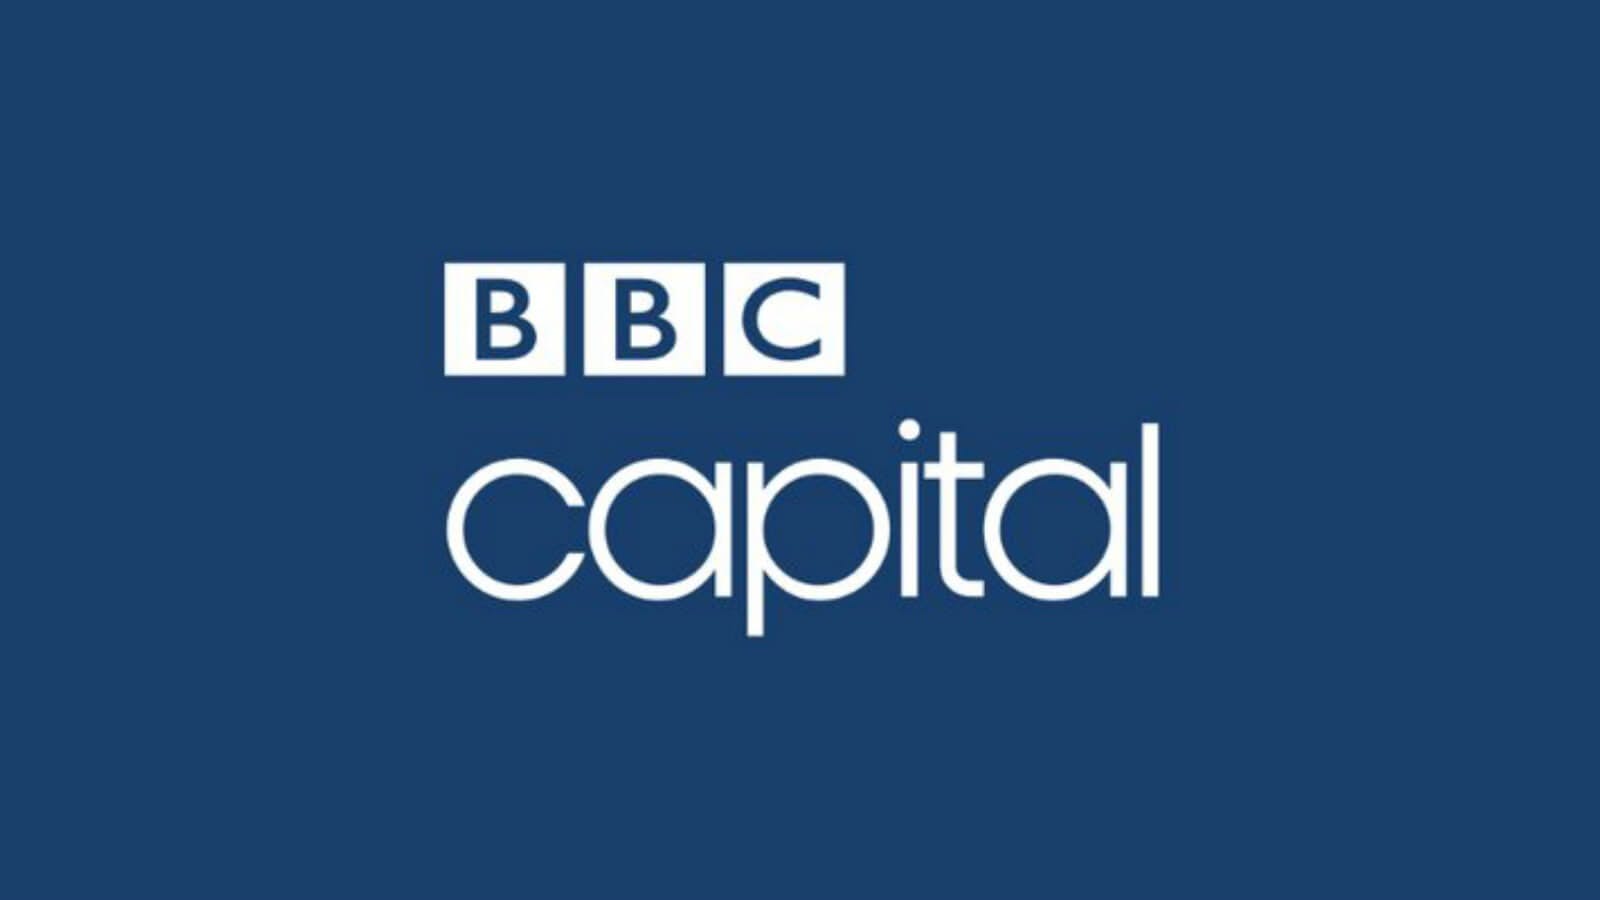 BBC Capital logo 